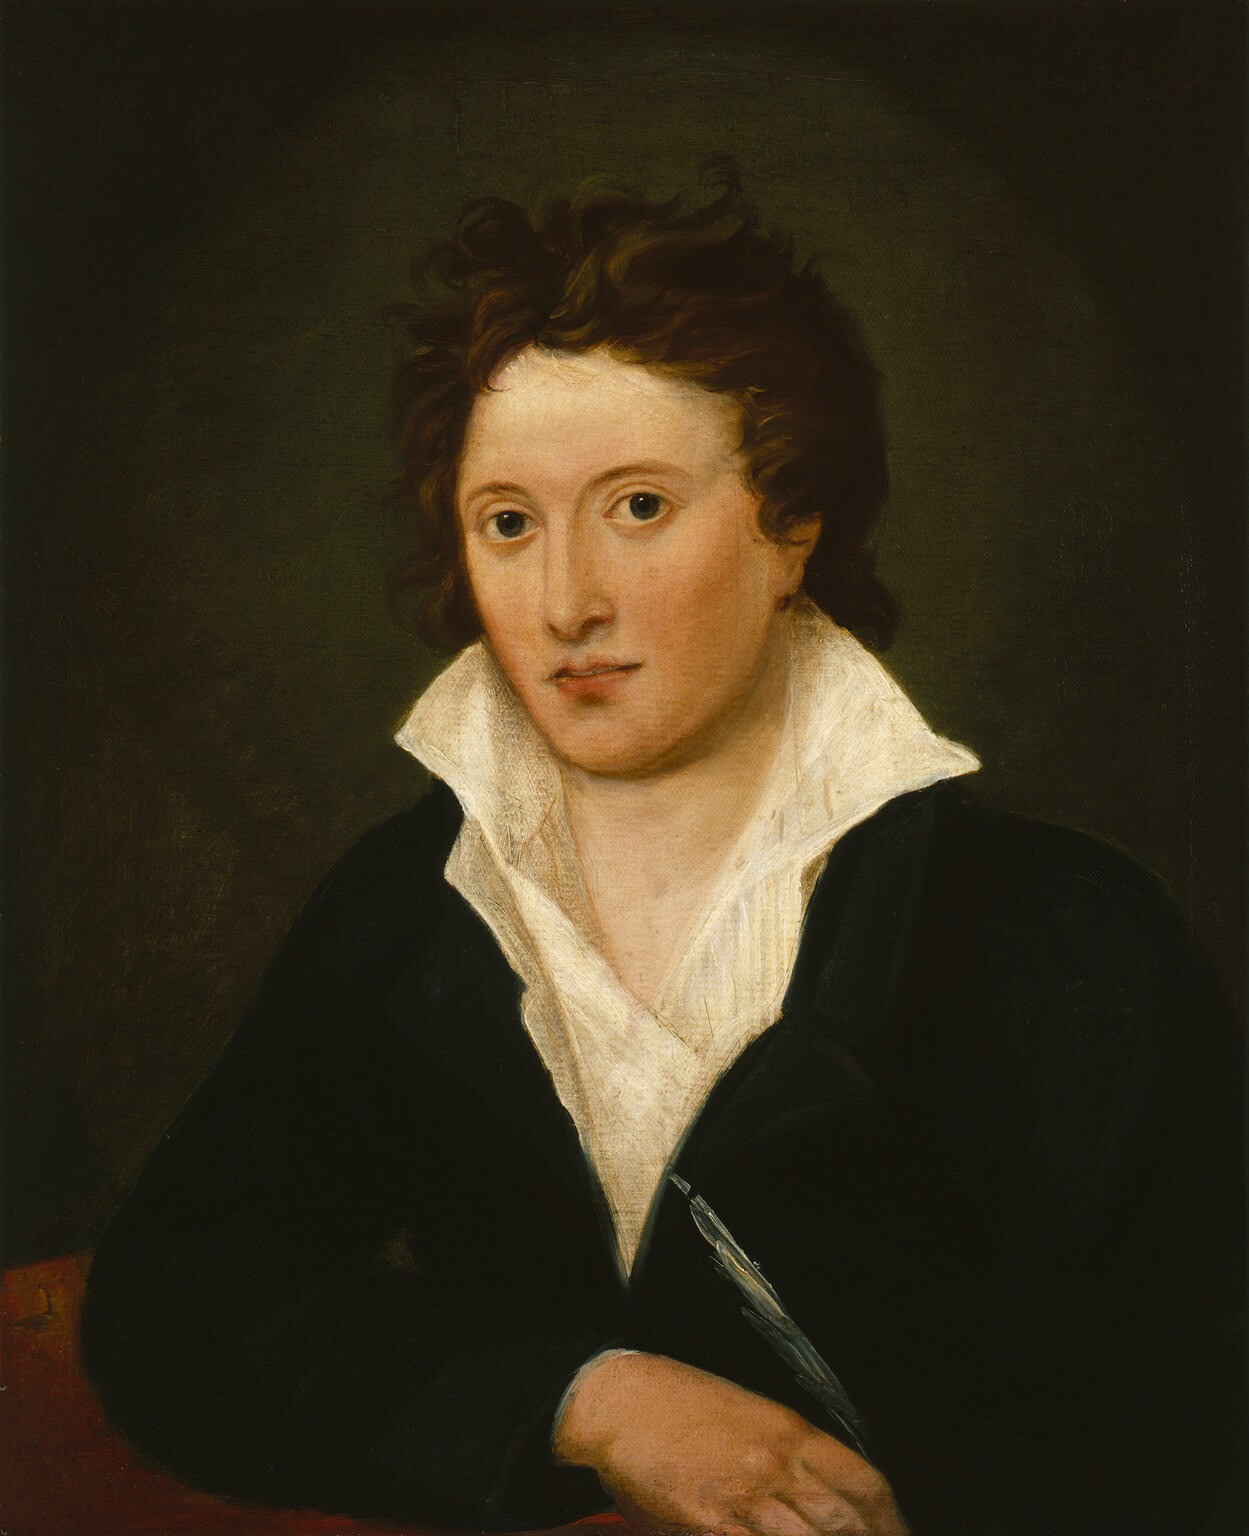 Portrait_of_Percy_Bysshe_Shelley_by_Curran%2C_1819.jpg